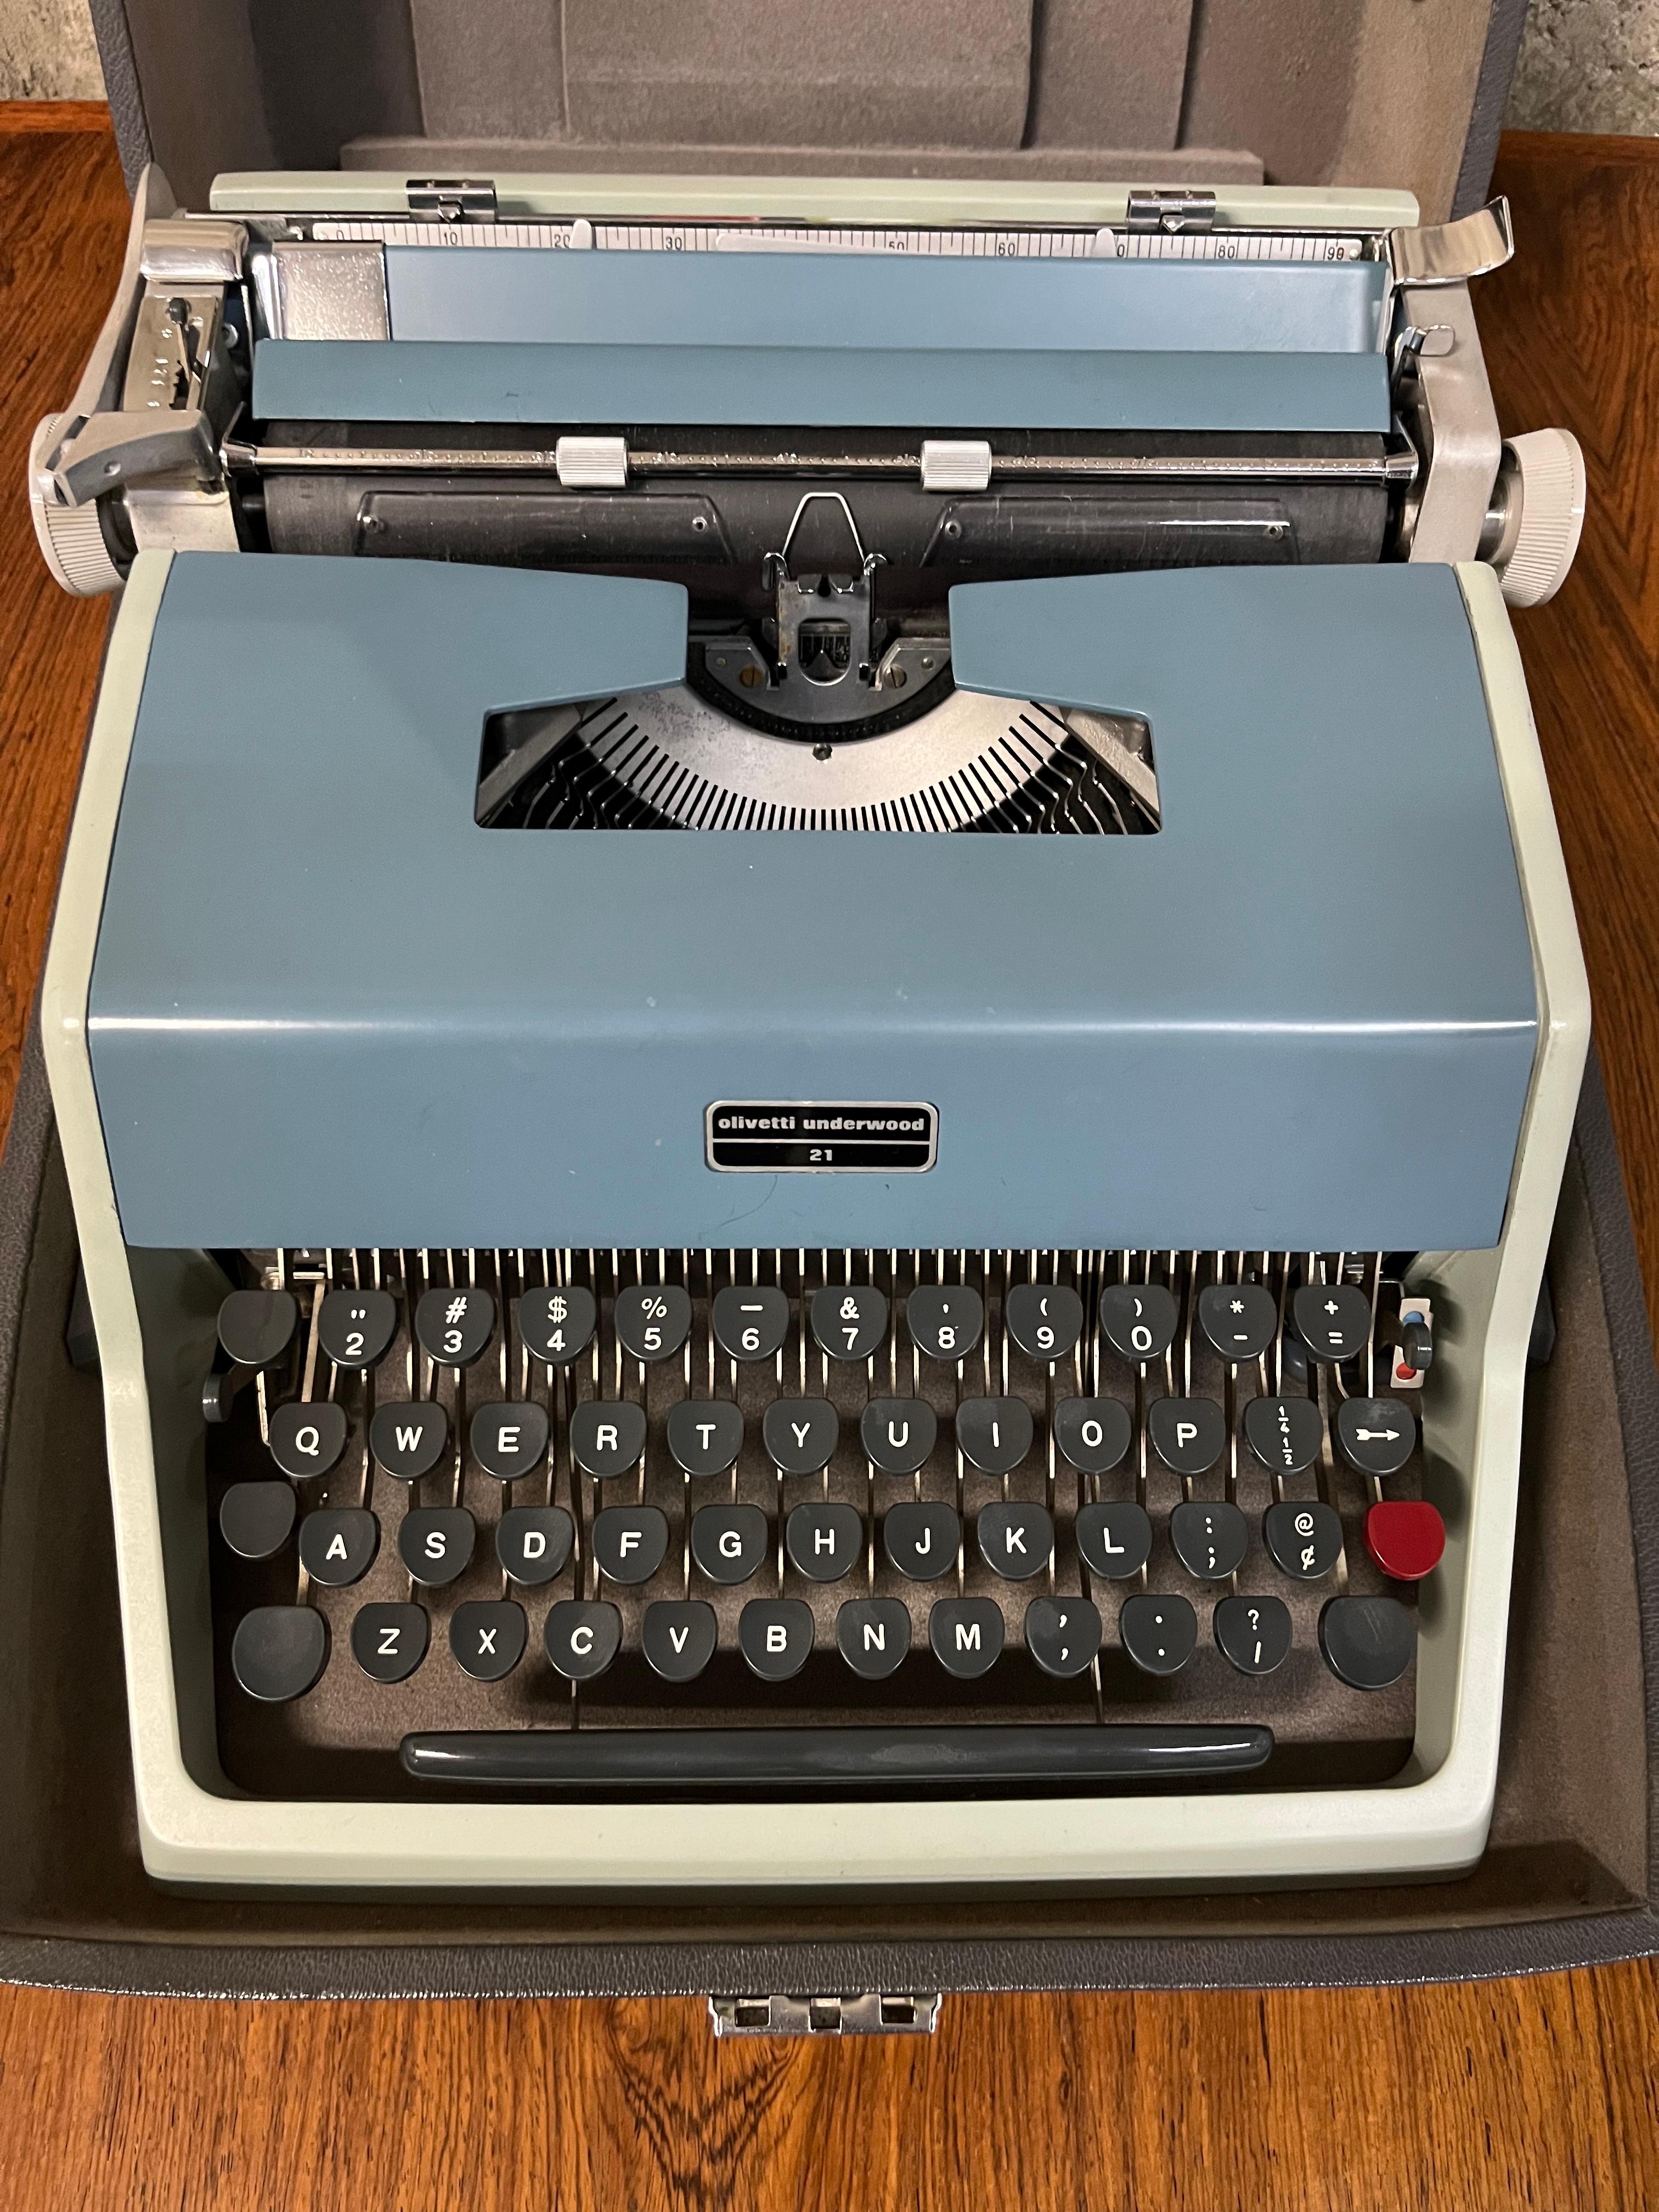 Metal 1960s Olivetti Underwood 21 Portable Typewriter With Original Travel Case